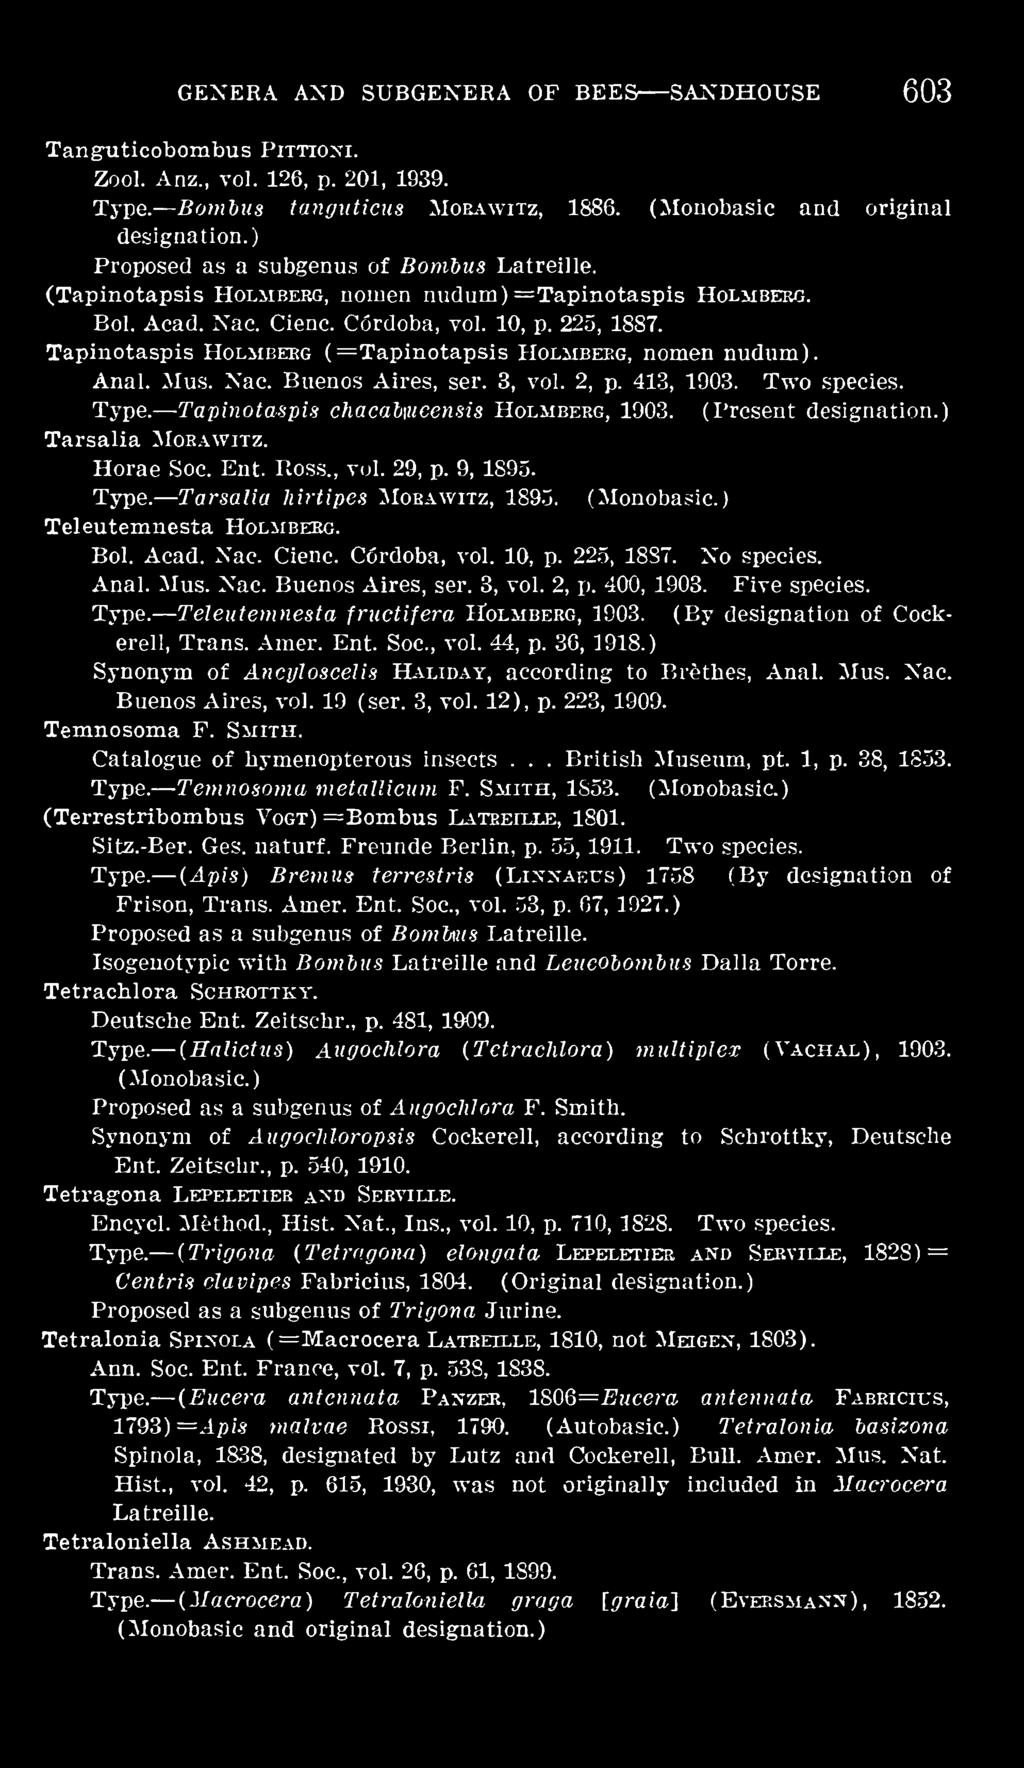 225, 1887. No species. Anal. Mus. Nac. Buenos Aires, ser. 3, vol. 2, p. 400, 1903. Five species. Teleutemnesta fructifera Holmbeeg, 1903. (By designation of Cockerell. Trans. Amer. Ent. Soc, vol.